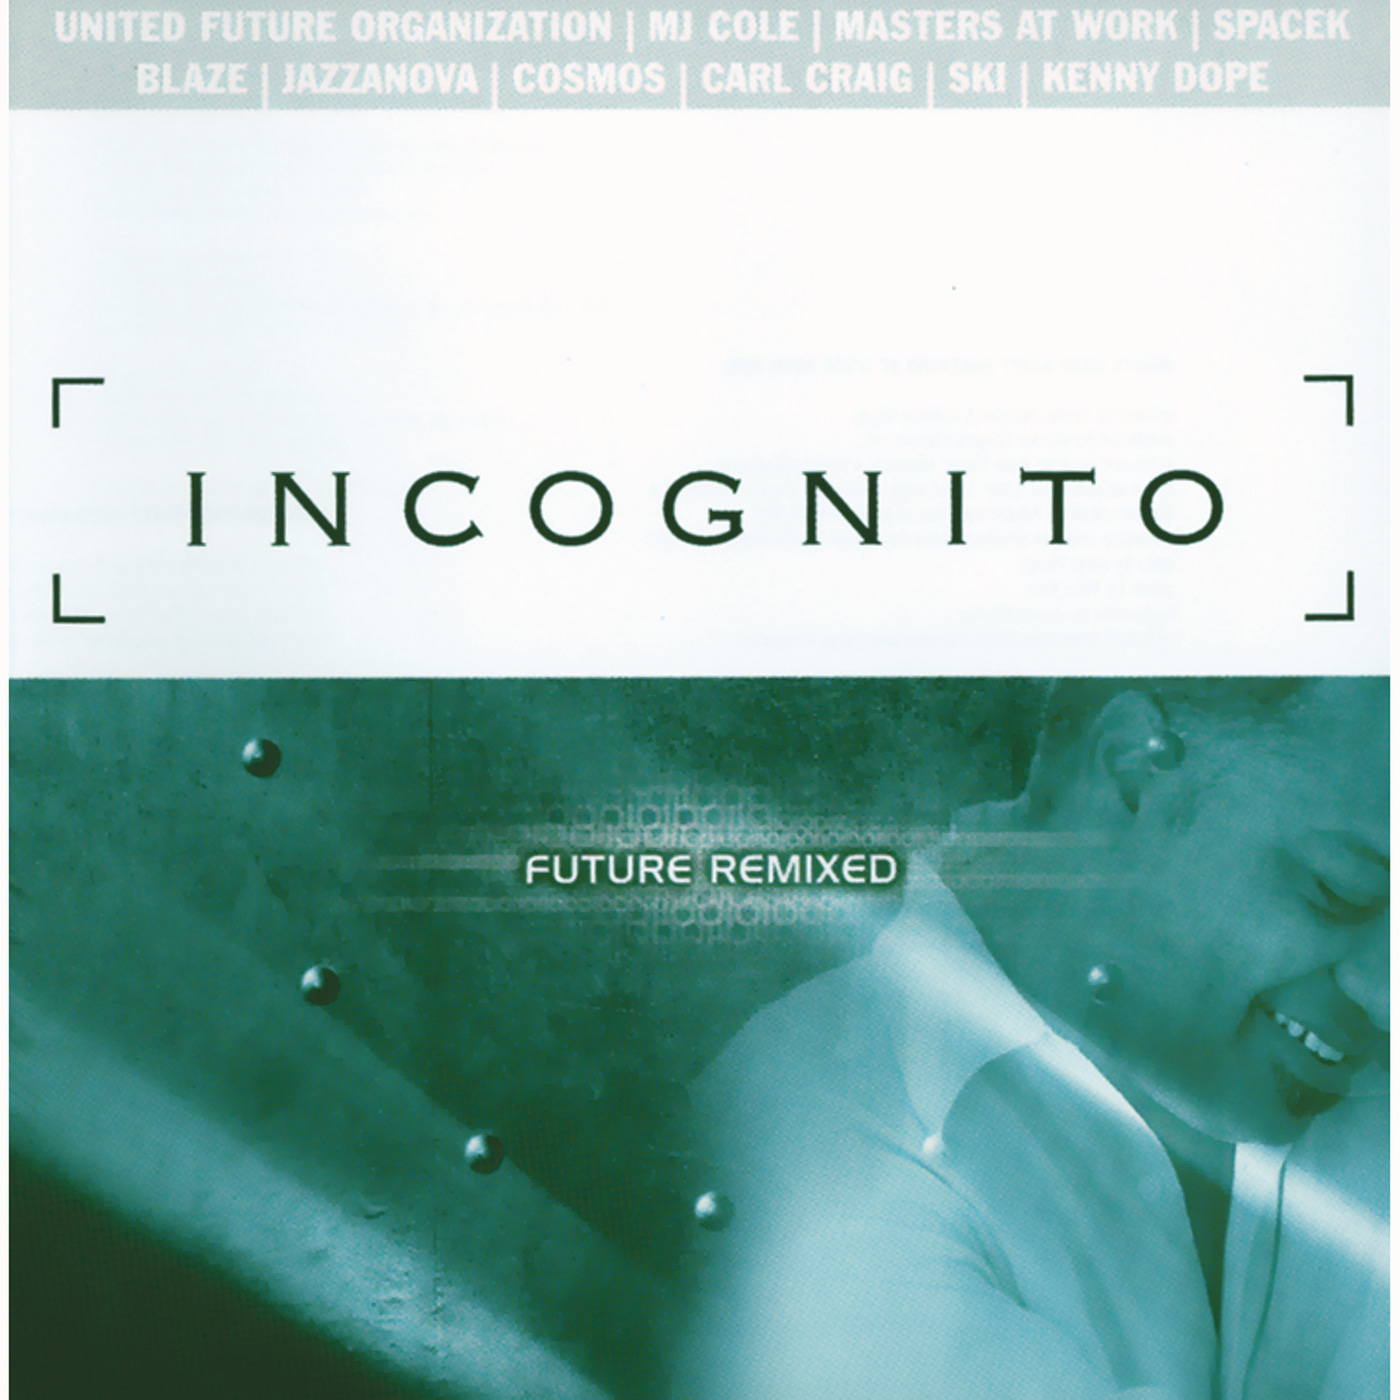 Incognito-Nights Over Egypt (MJ Cole Remix)